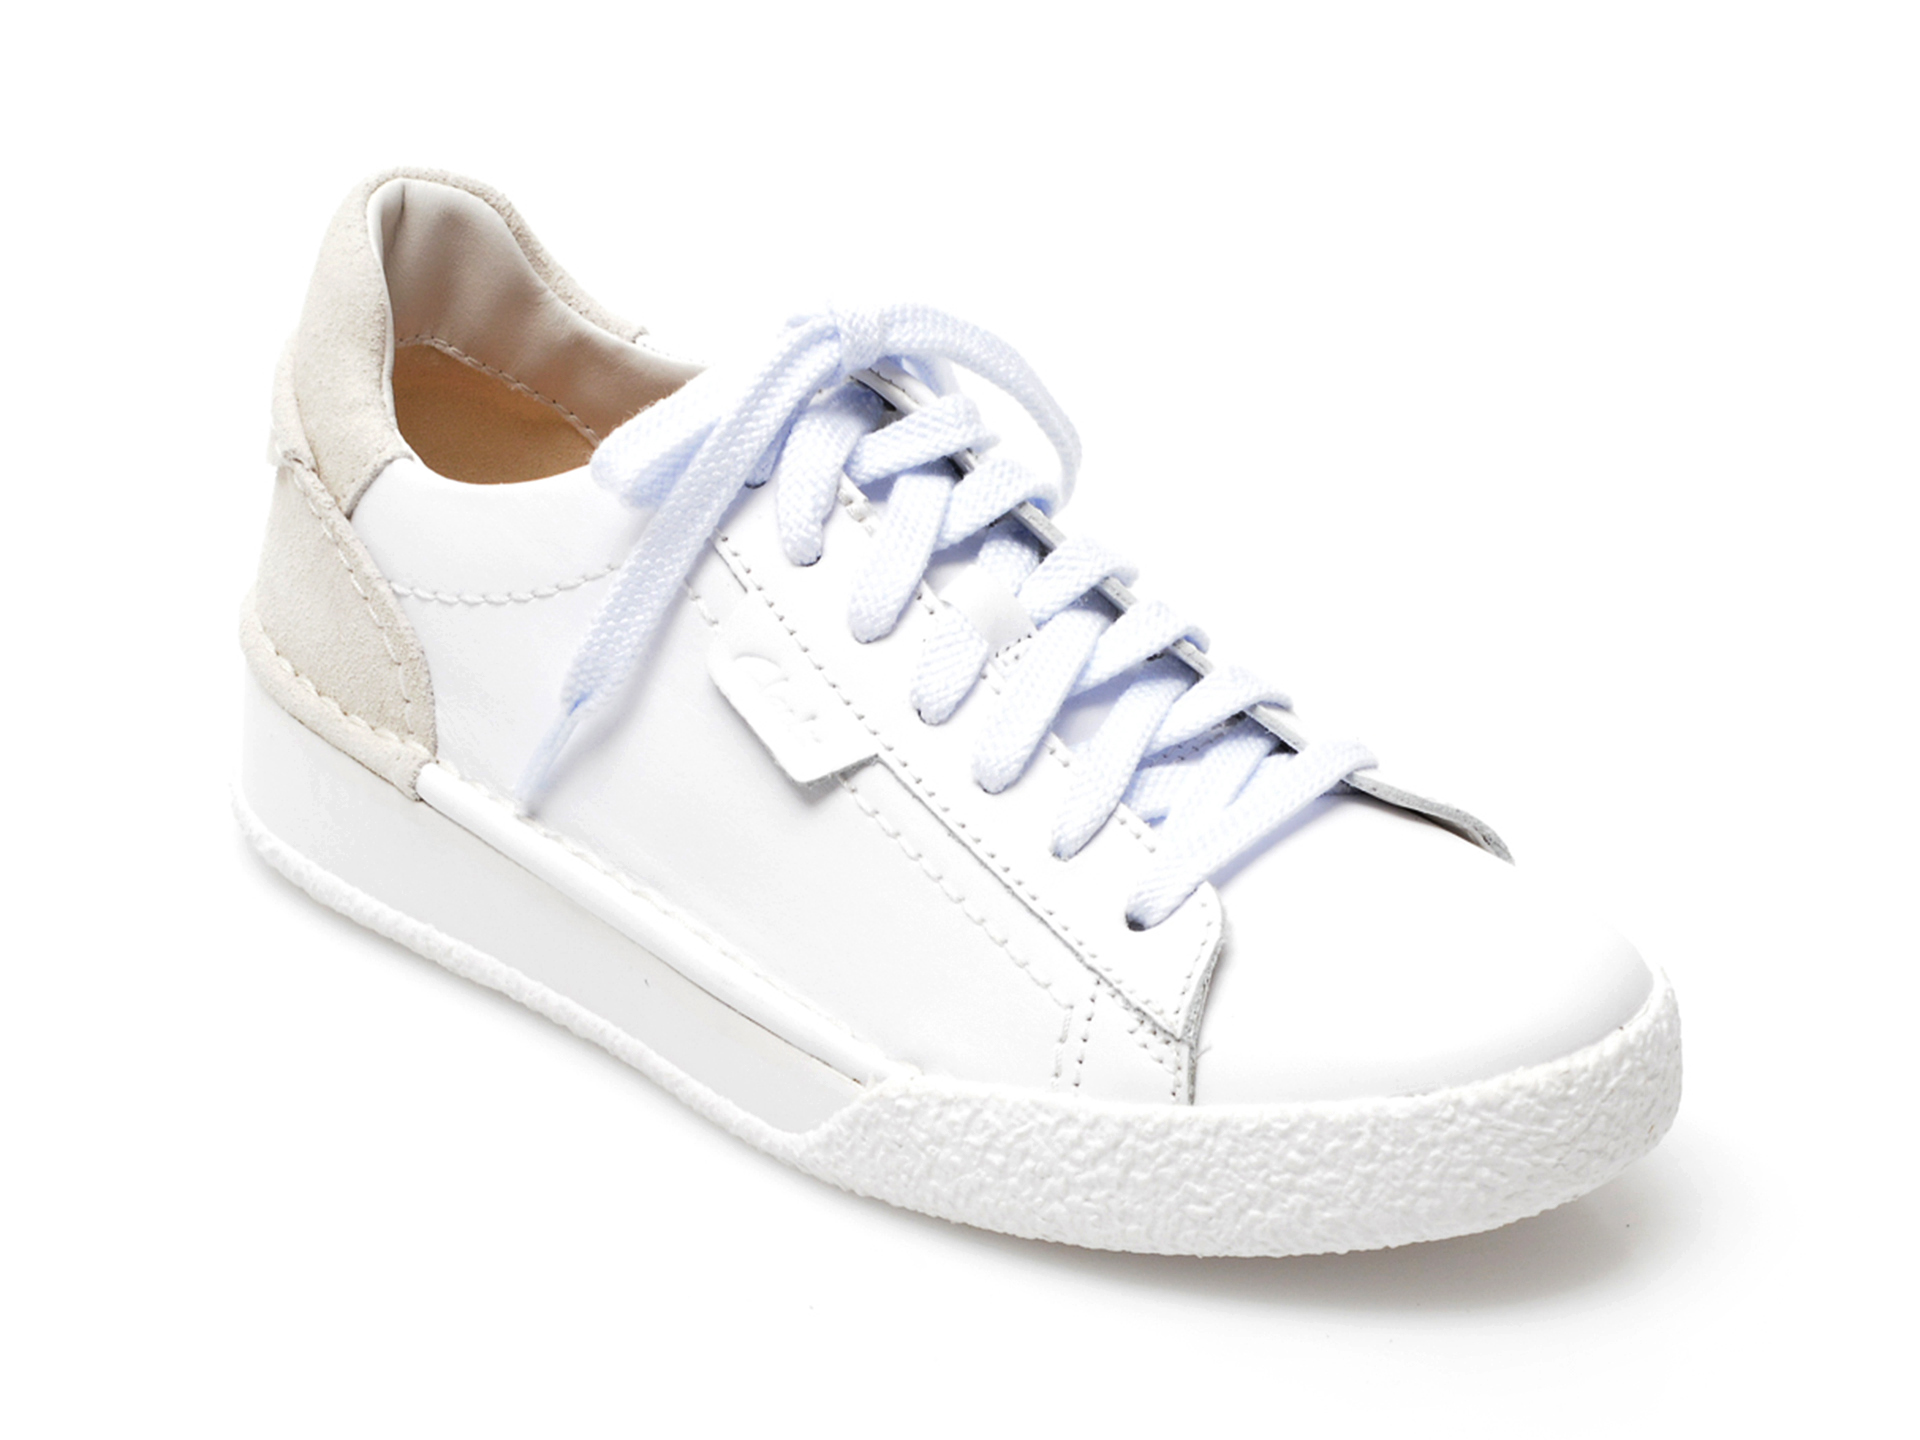 Pantofi sport CLARKS albi, CRACULA, din piele naturala Clarks Clarks